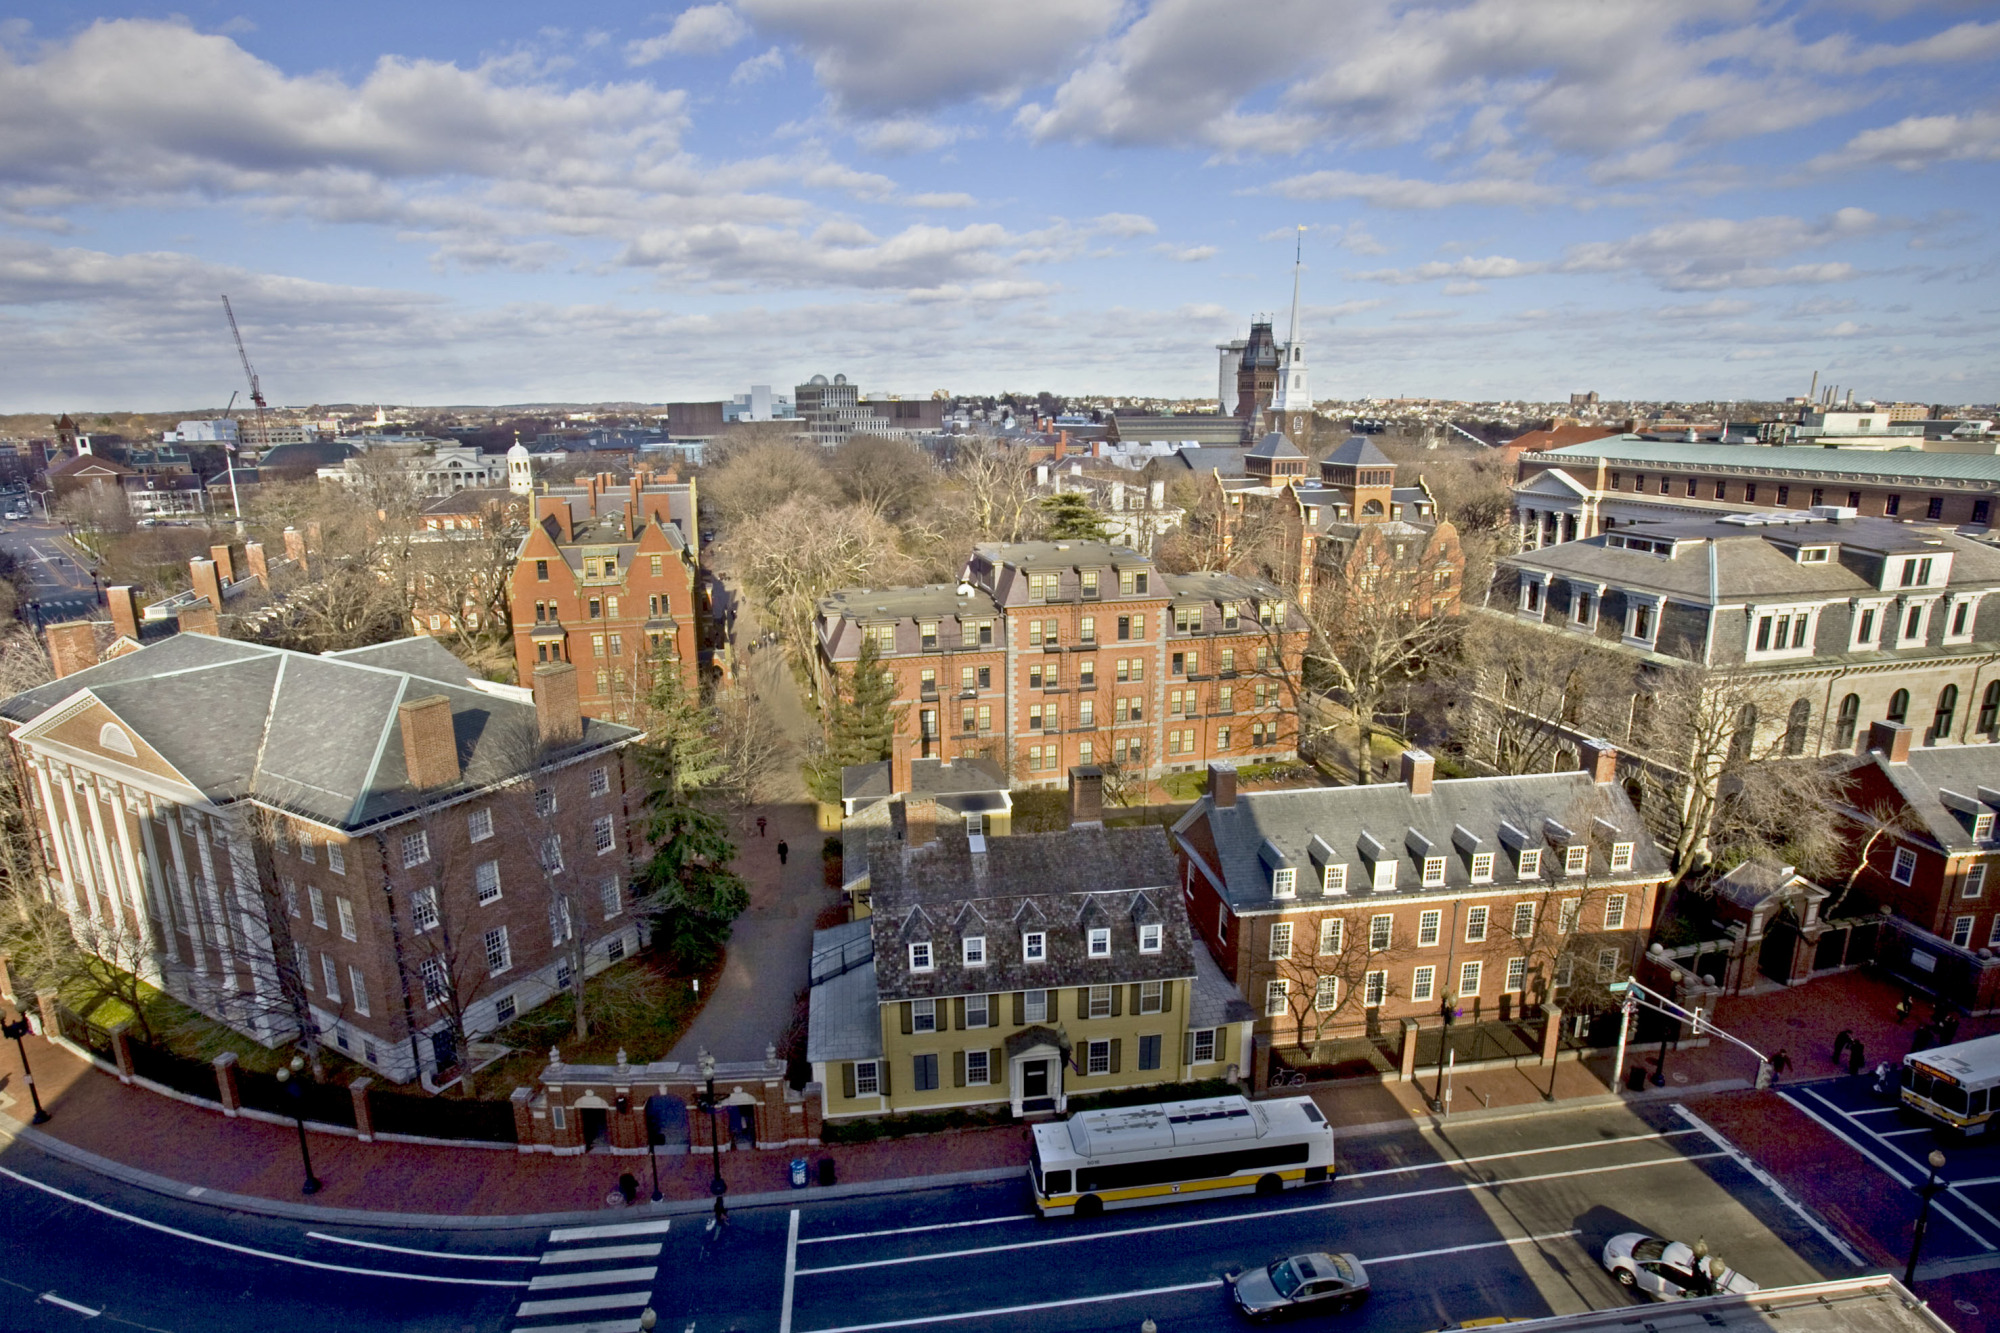 Harvard Yard and Harvard Square in Cambridge, Massachusetts on Wednesday, December 16, 2009. Michael Fein/Bloomberg News
